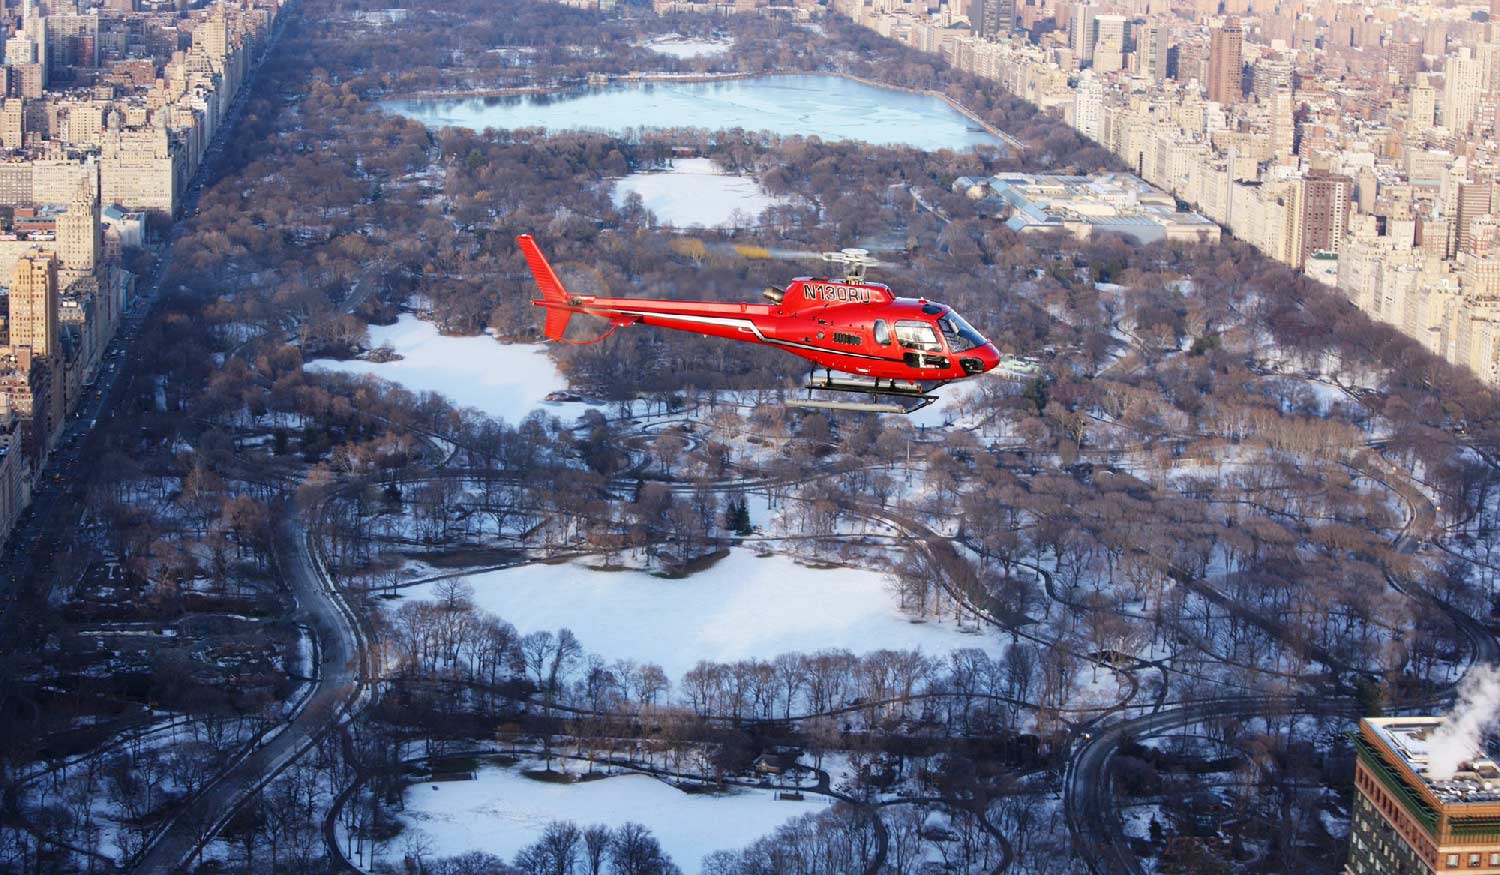 Legislators Want to Halt Helicopter Flights Over Manhattan